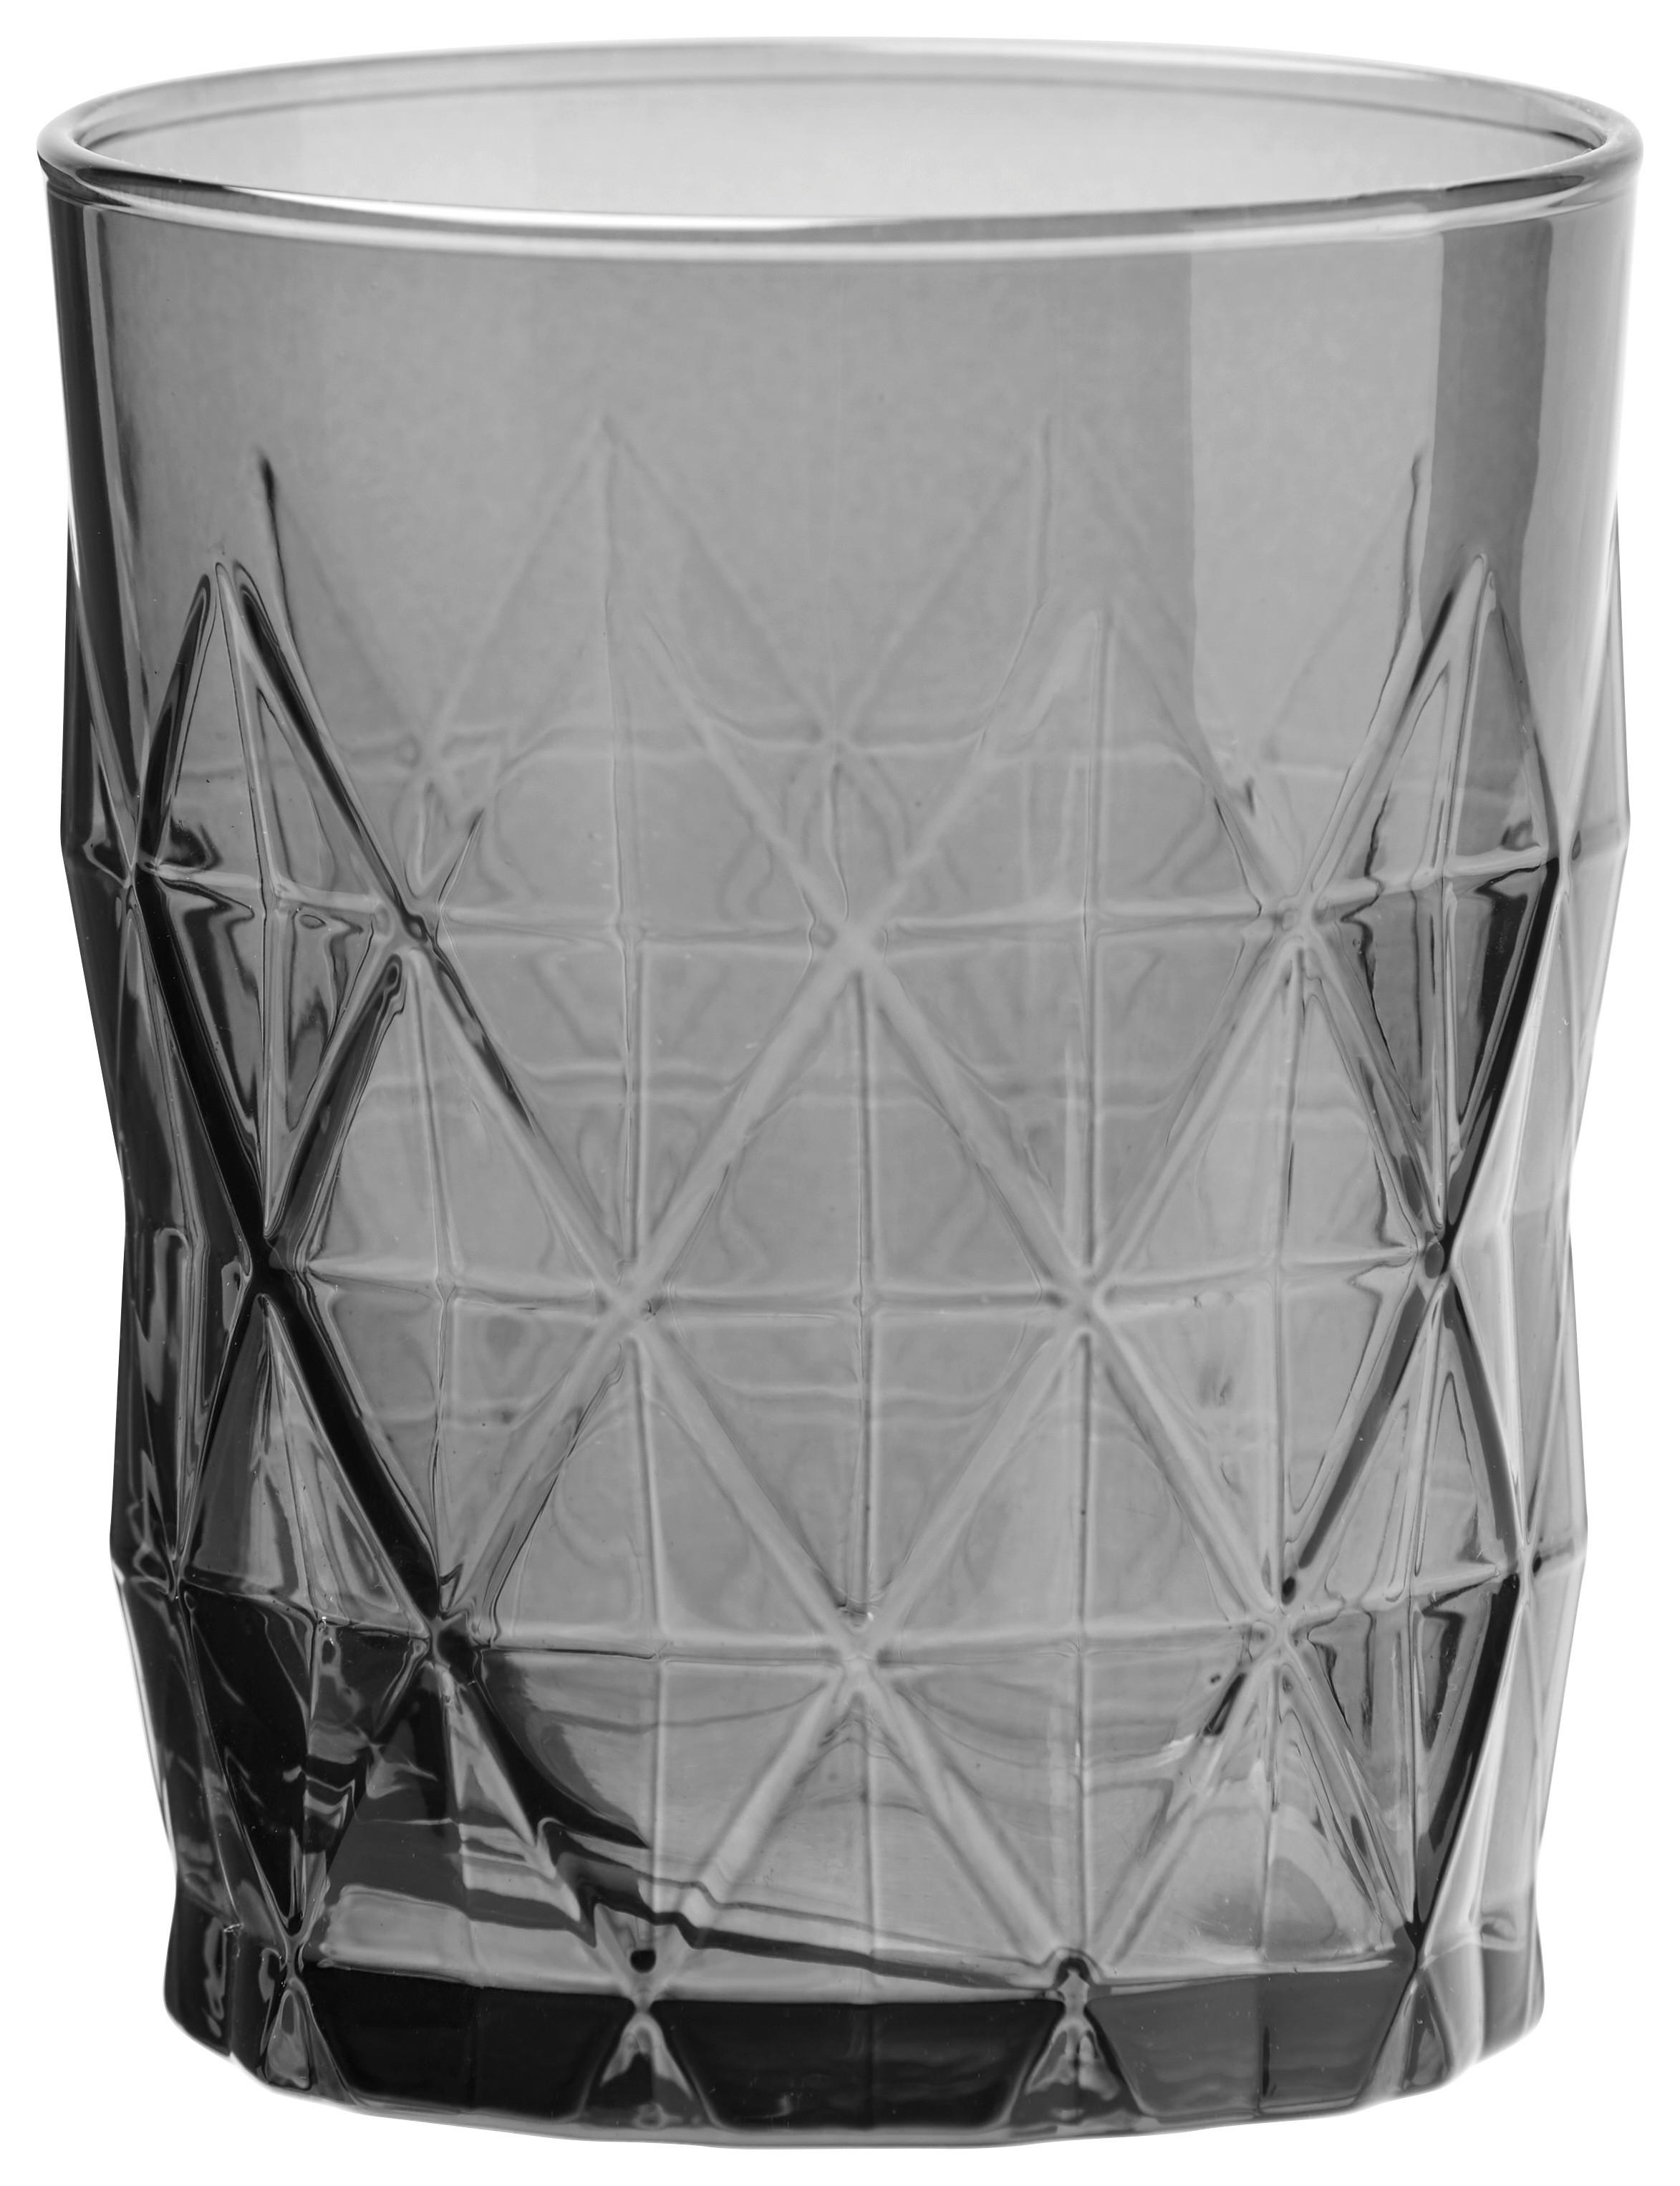 Sklenice Na Whisky Black Skye - tmavě šedá, Moderní, sklo (8,3/10cm) - Premium Living